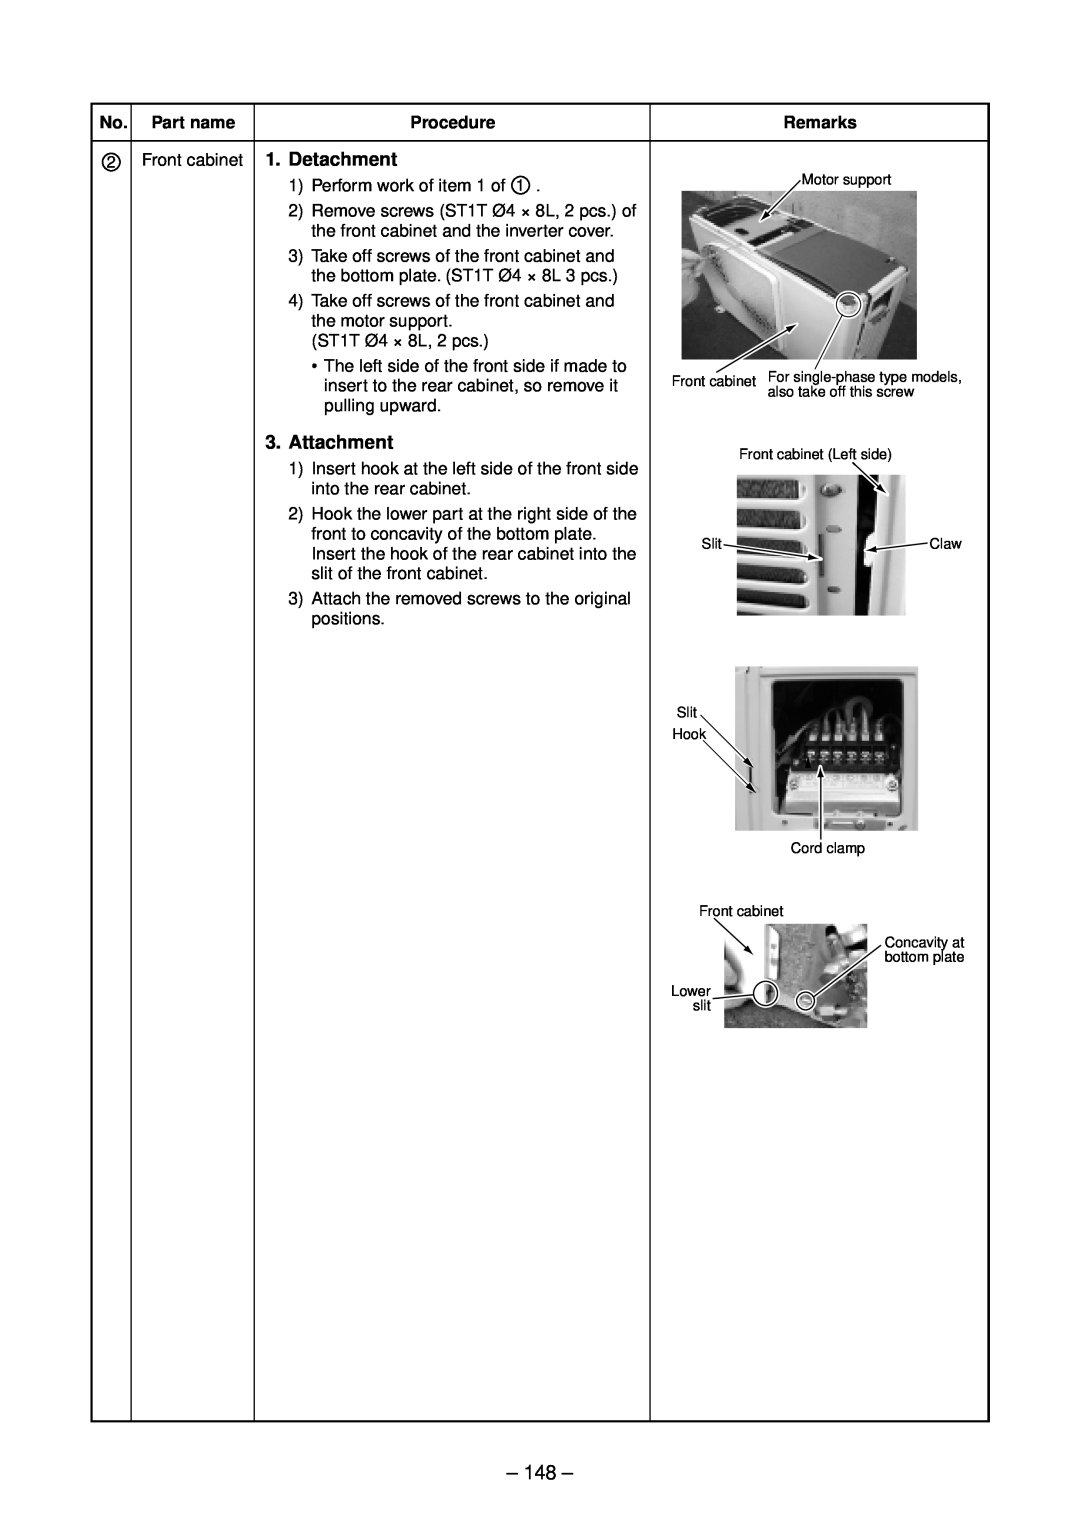 Toshiba RAV-SP454ATZ-E Attachment, No. Part name, Procedure, Front cabinet For single-phase type models, Slit, Lower slit 